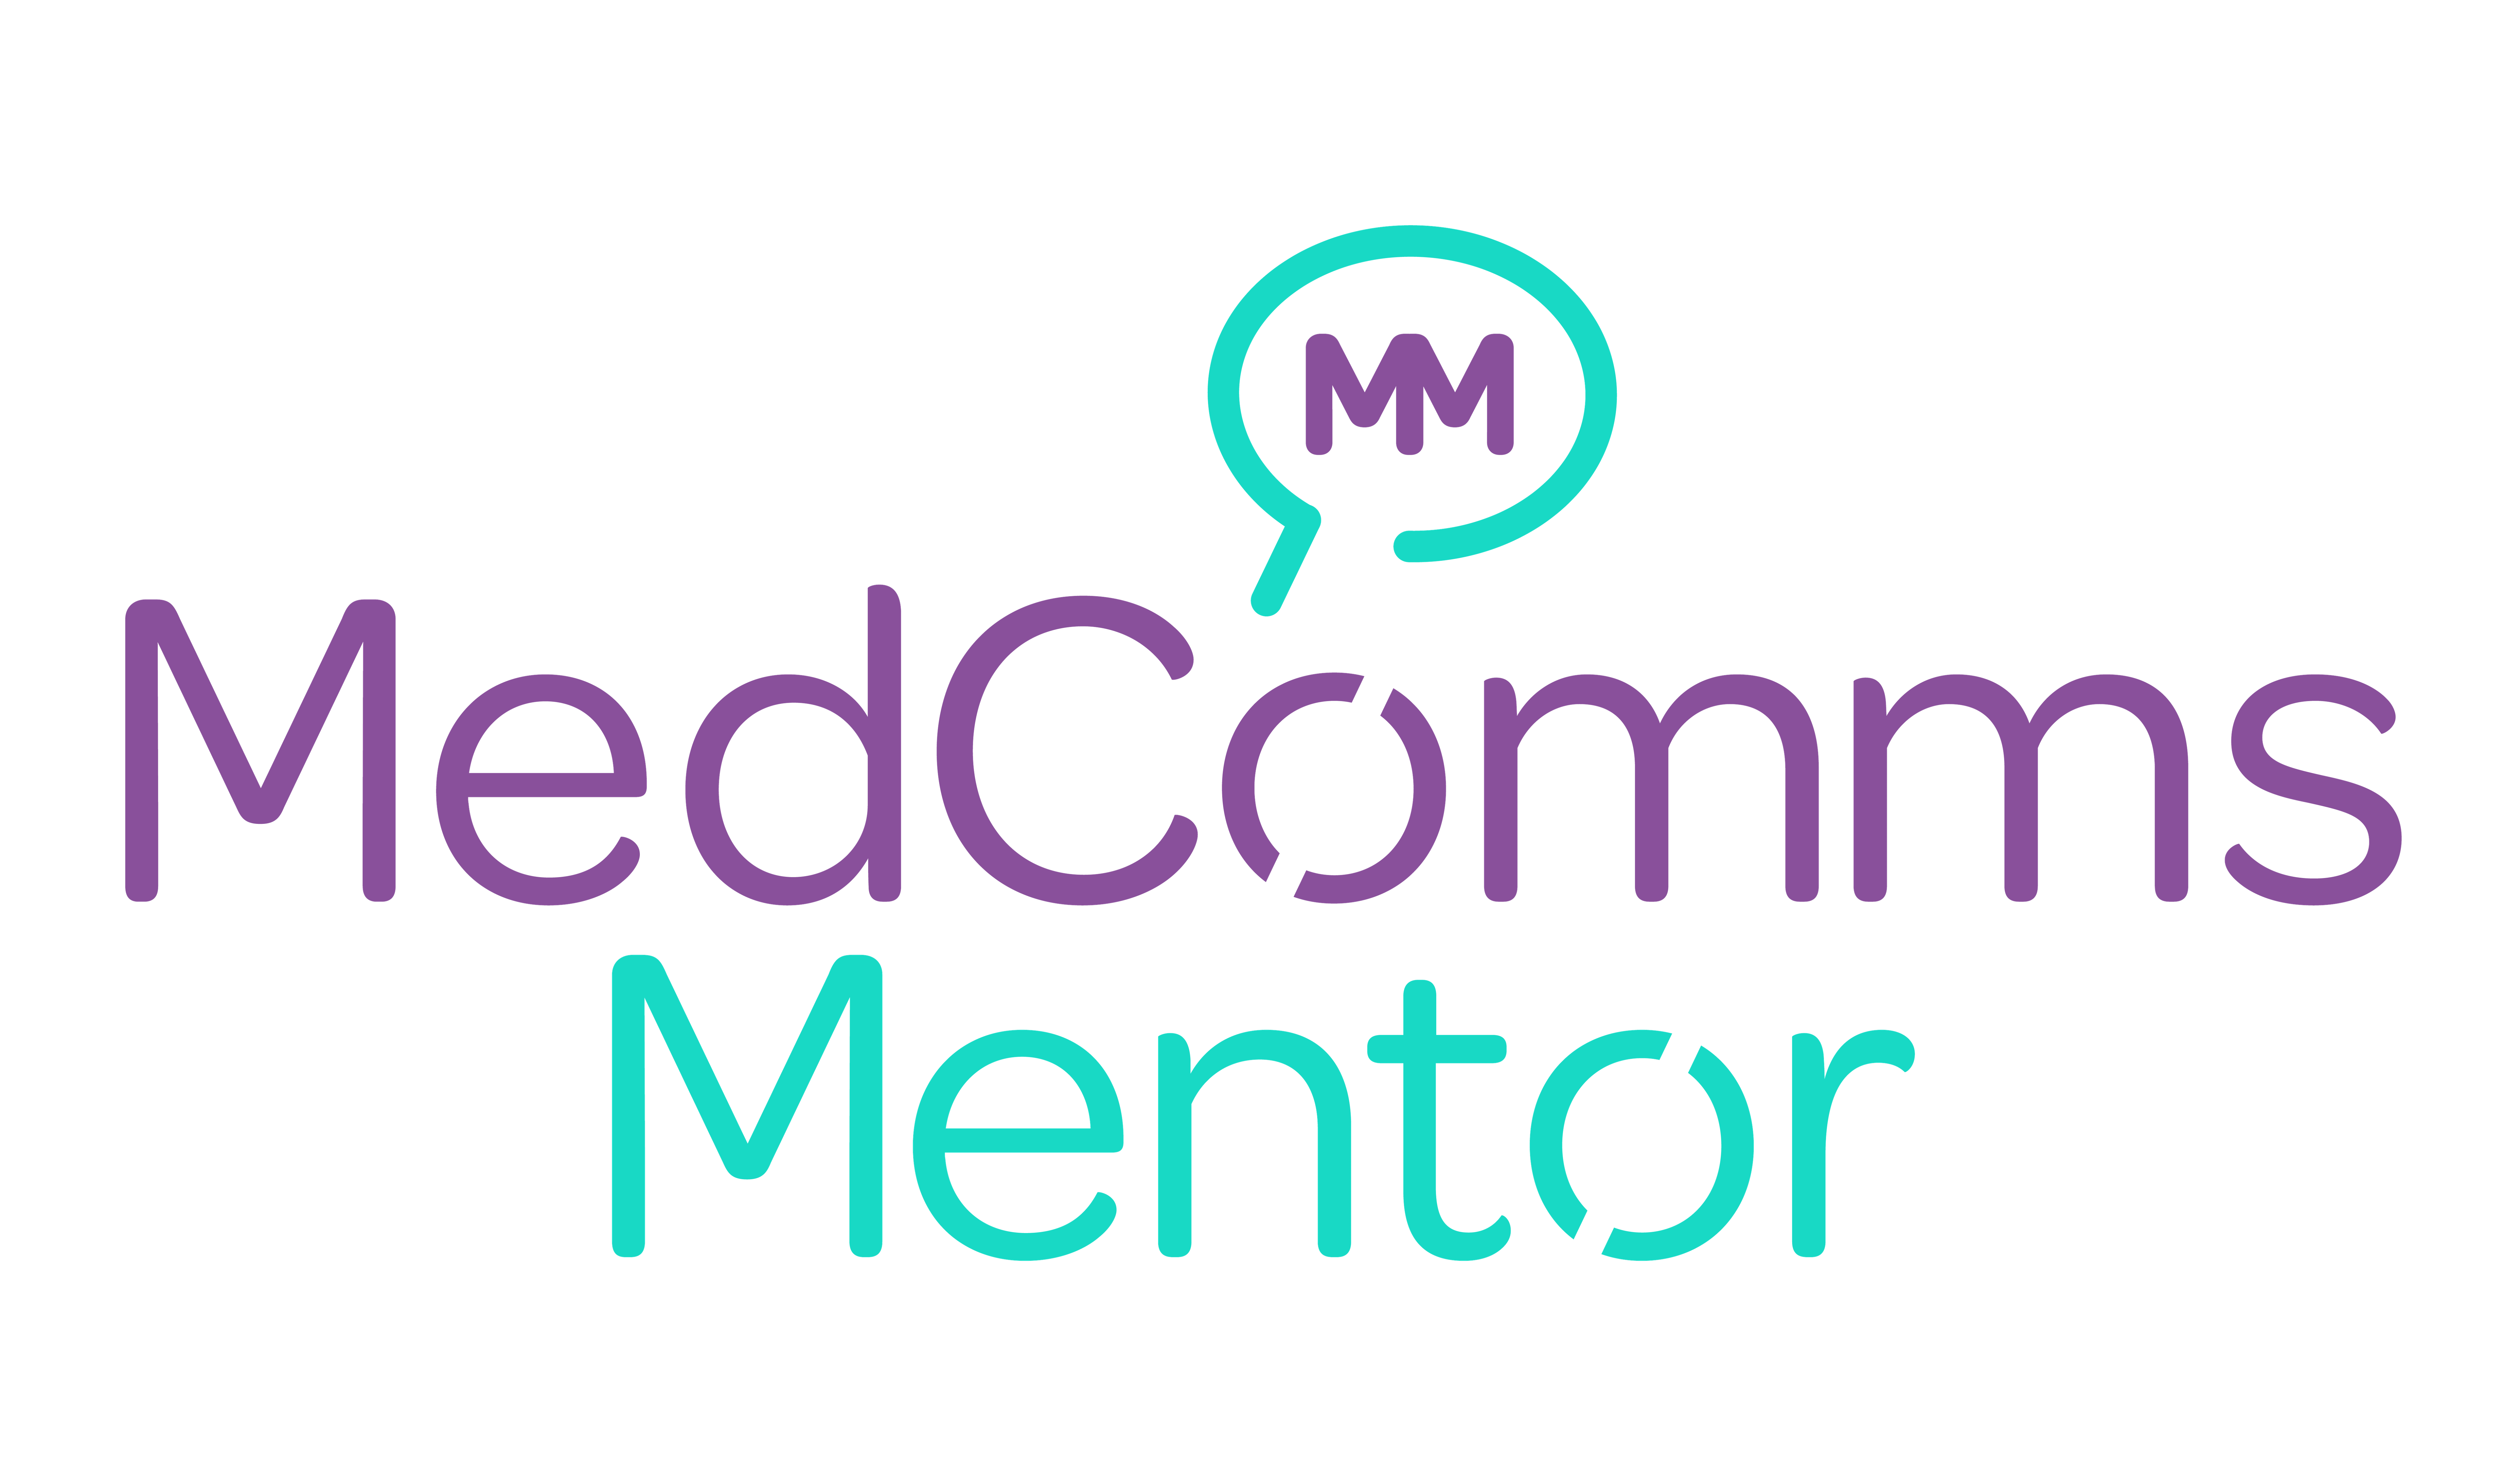 MedComms Mentor logo